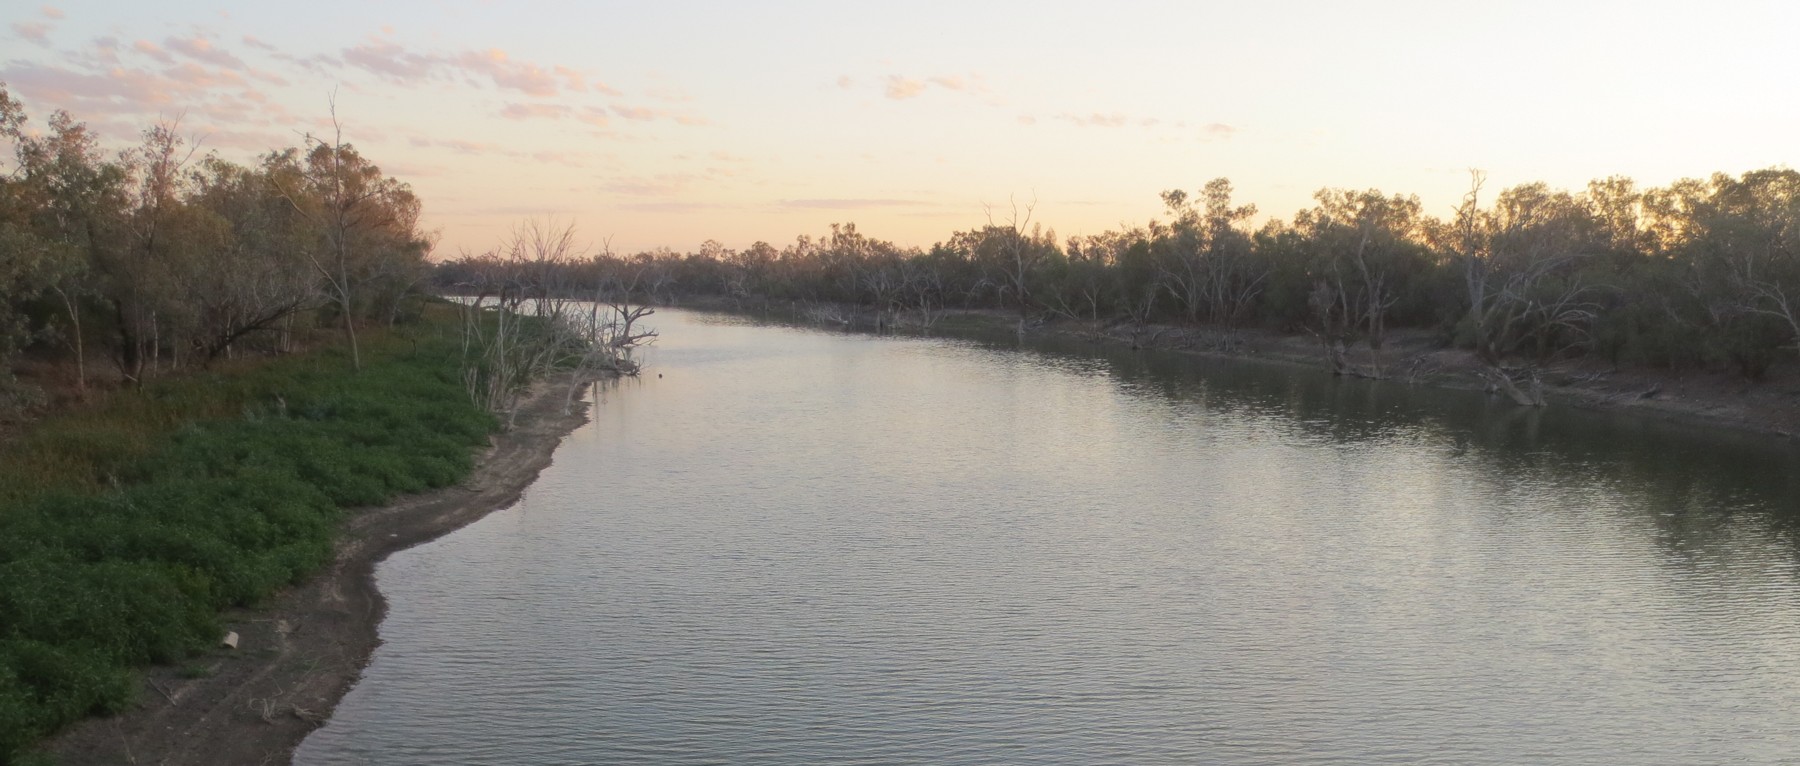 Warrego River, Cunnamulla, Qld